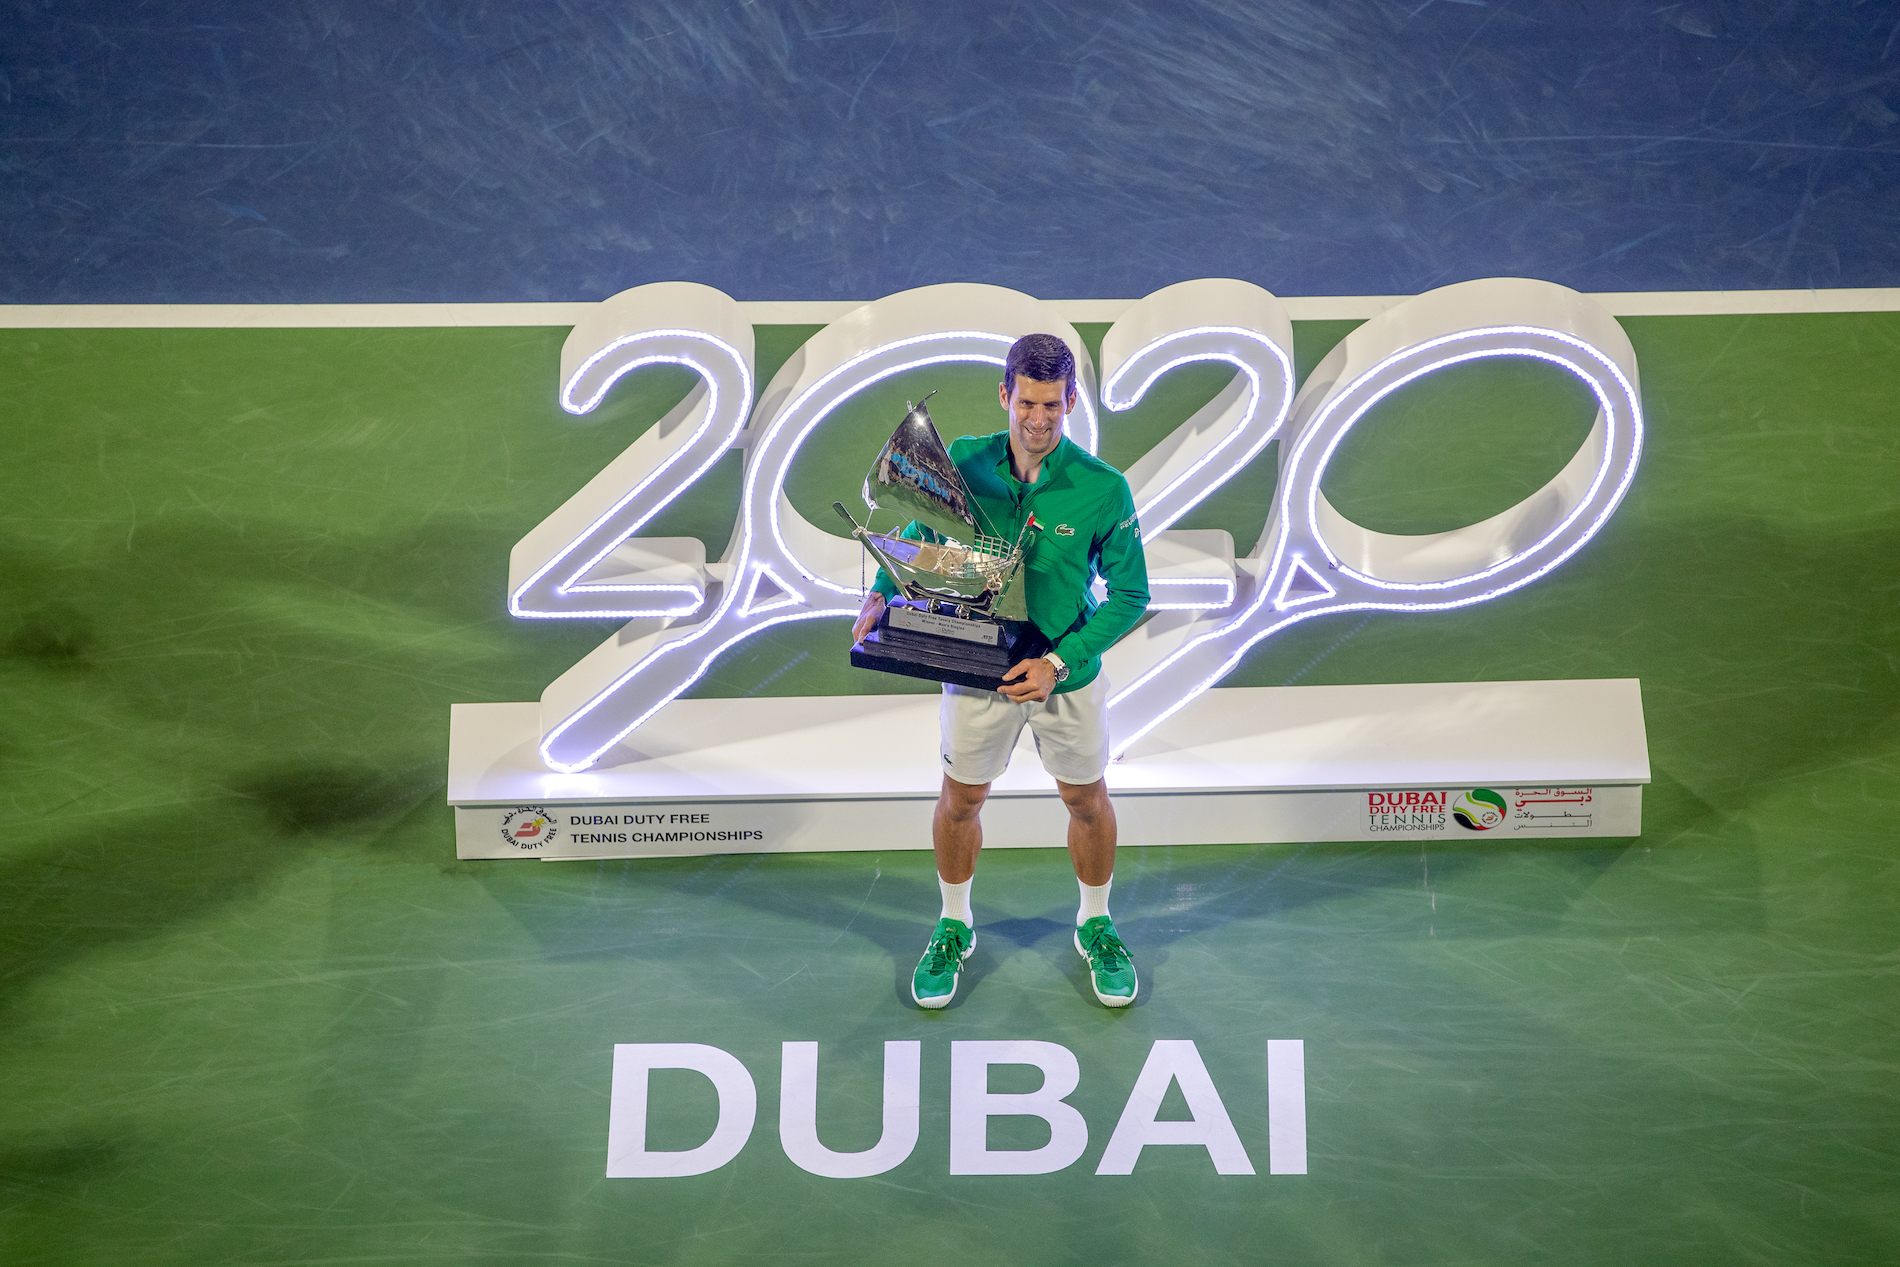 Professor Onderhoud Bitterheid Photos: ATP Day 6 in Dubai through the lens - Dubai Duty Free Tennis  Championships